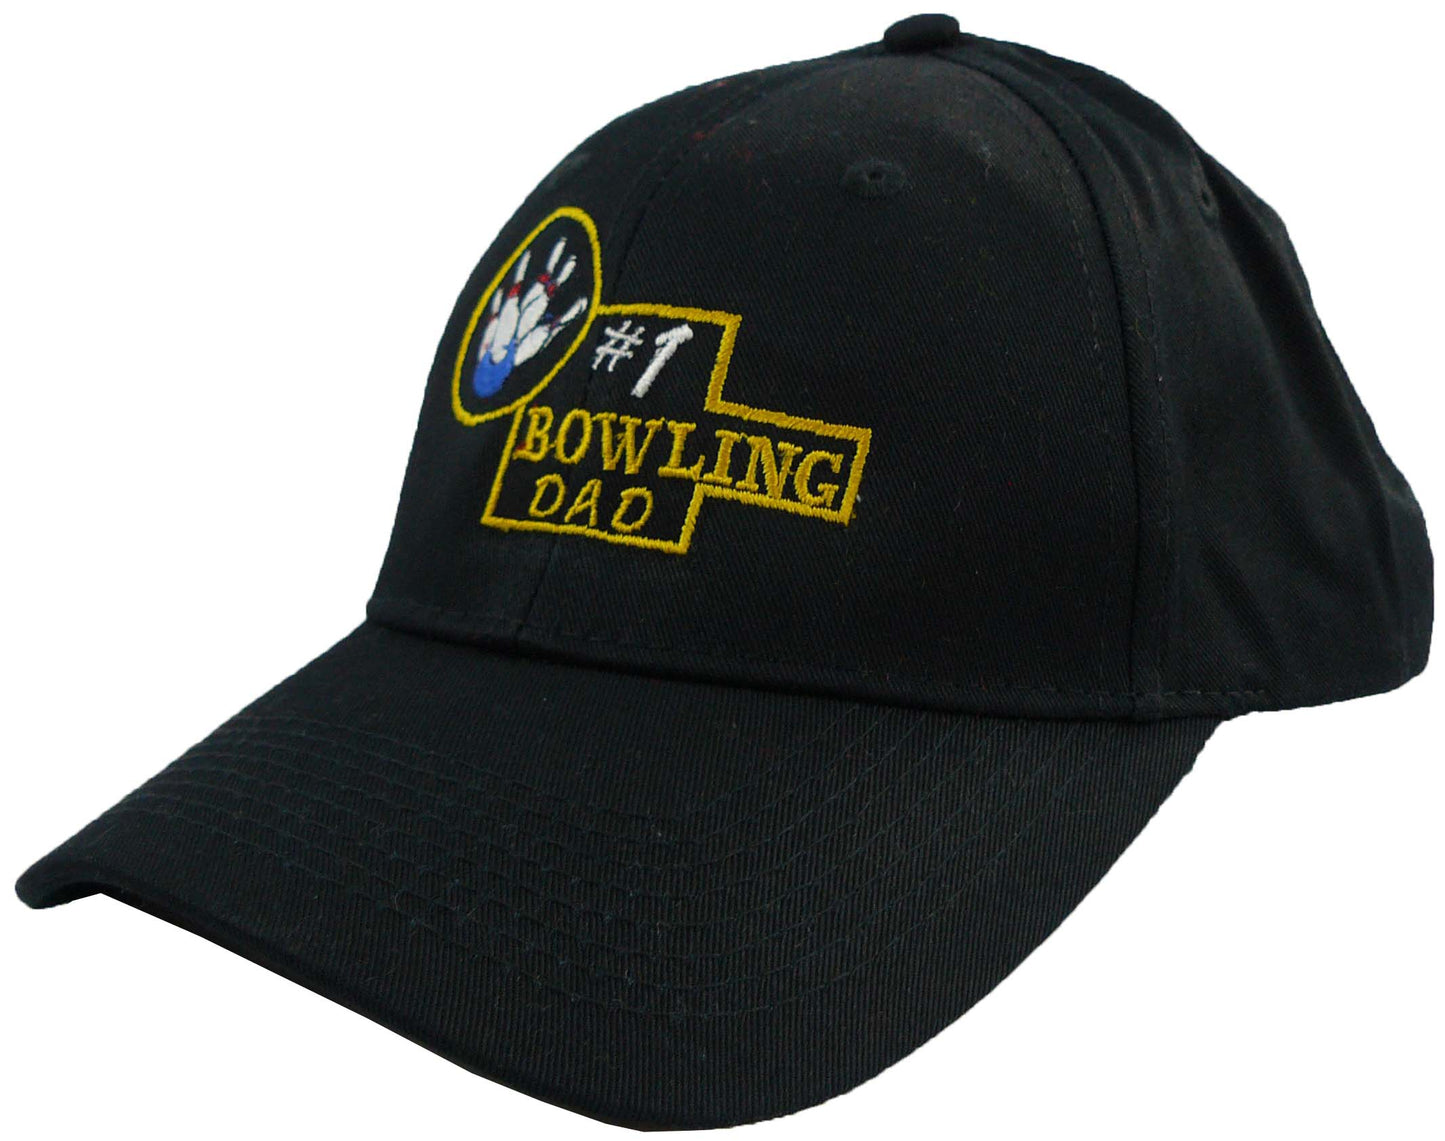 #1 Bowling Dad Baseball Hat